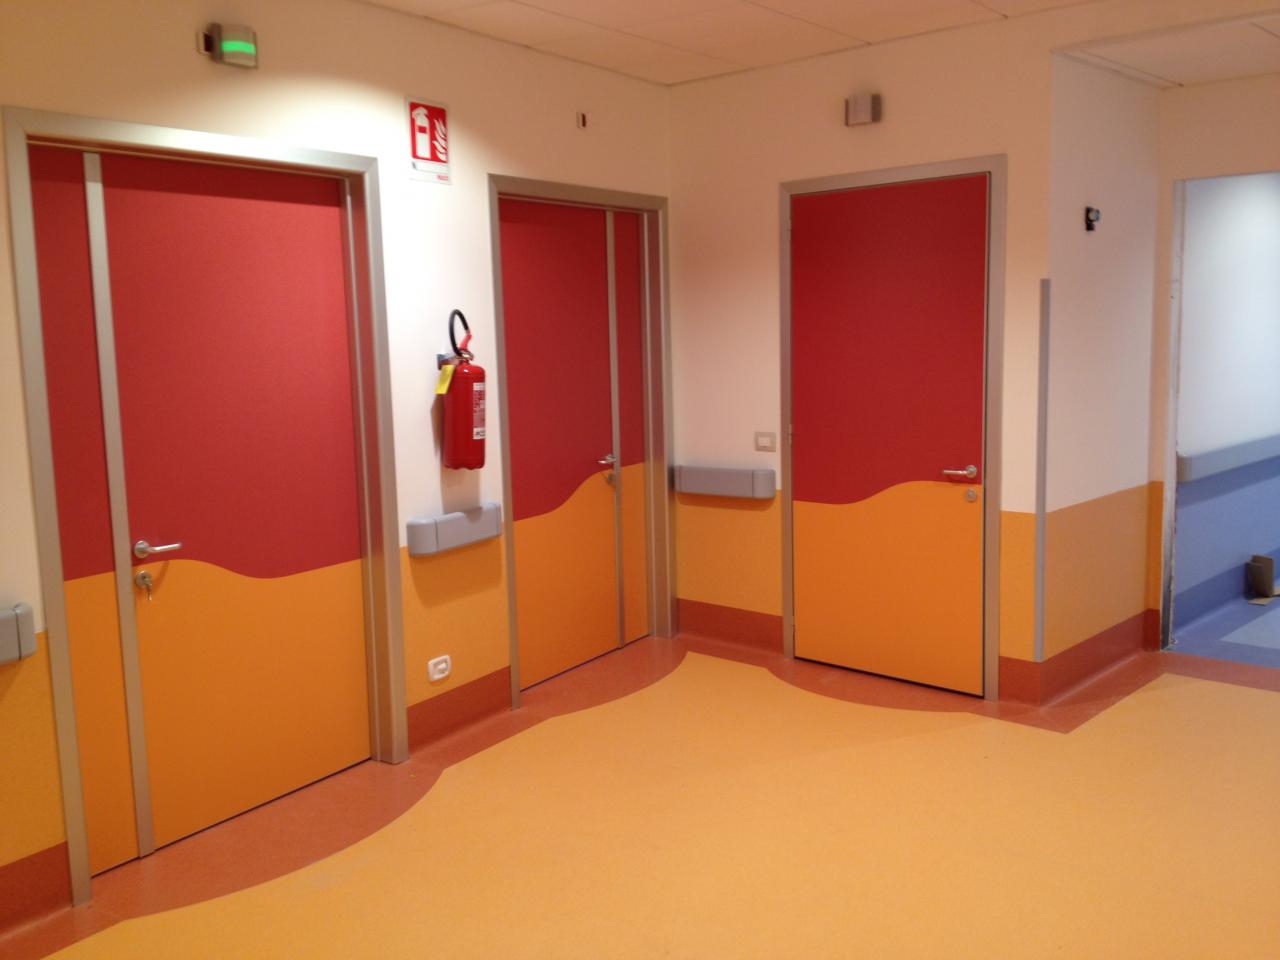 Porte per ospedali: qualità, igiene e sicurezza